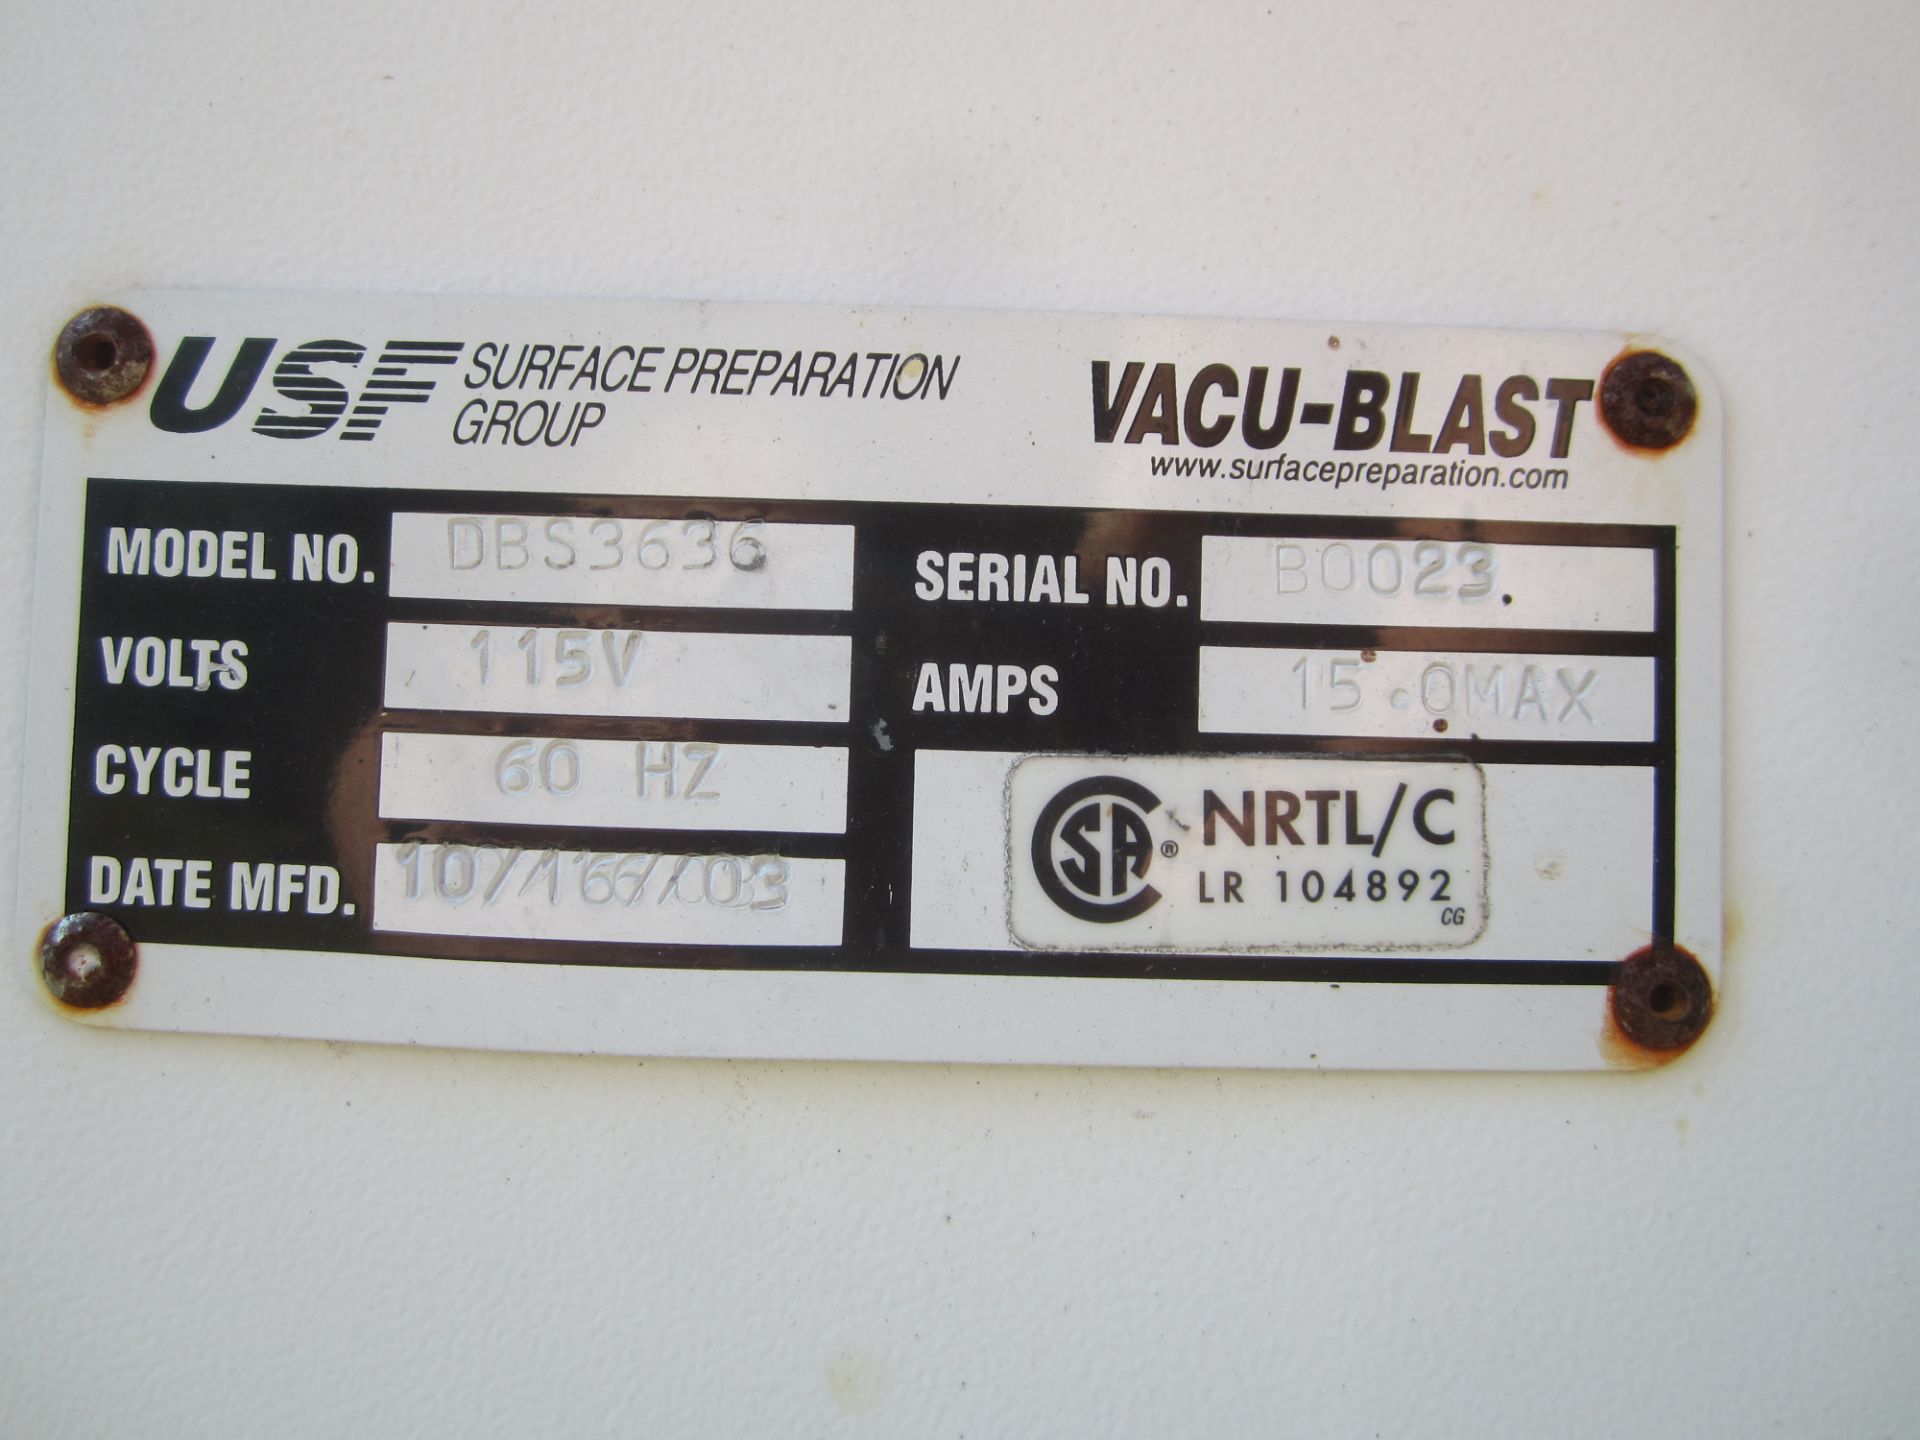 Vacu-Blast Model DBS3636 Dry Blast Cabinet, Inside Dimensions 36" X 36" X 34" - Image 5 of 5